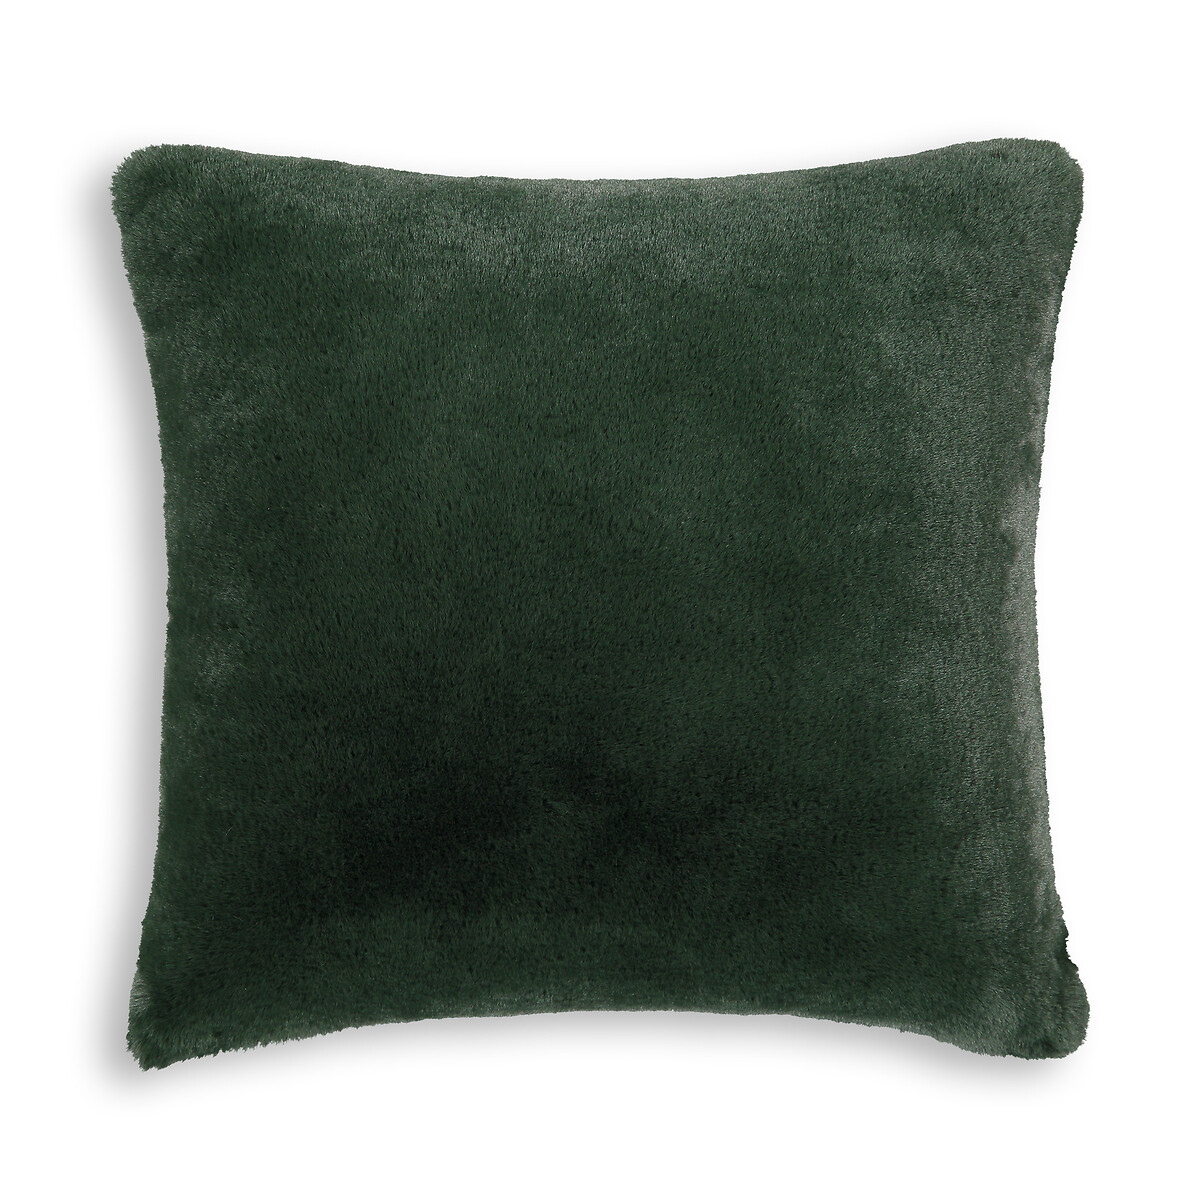 Чехол LaRedoute На подушку под мех Colton 40 x 40 см зеленый, размер 40 x 40 см - фото 2